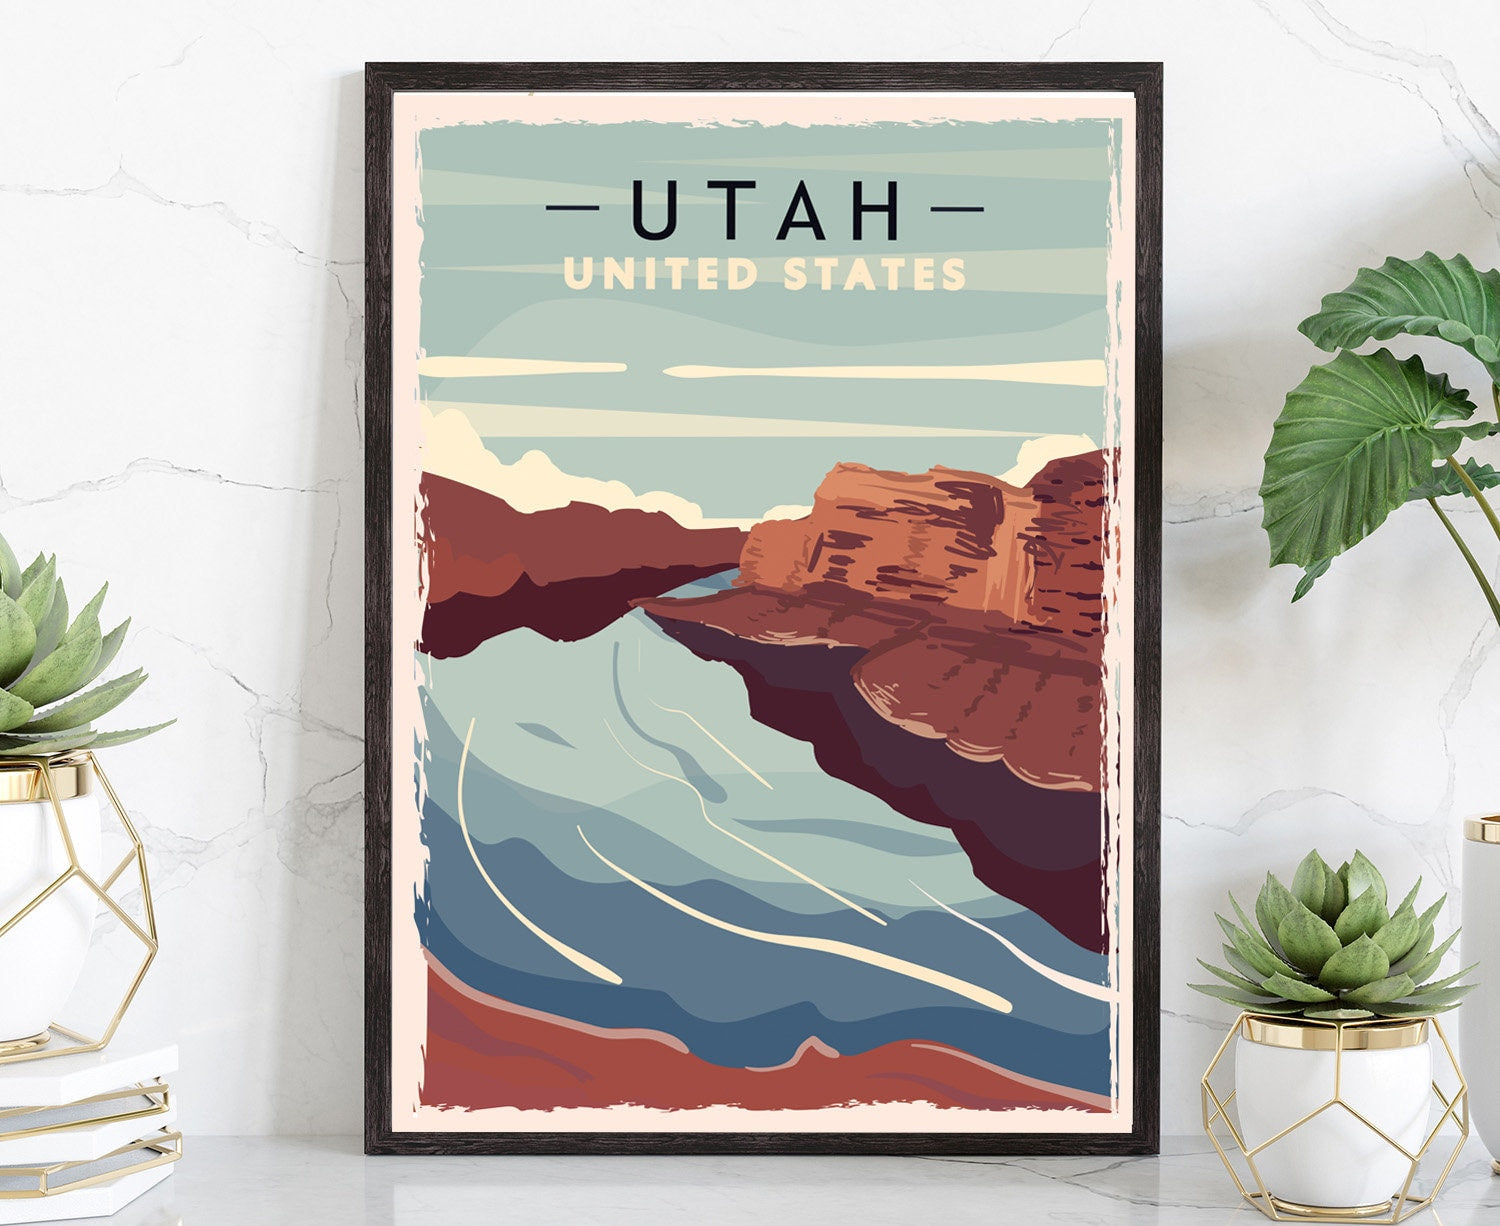 Utah Vintage Rustic Poster Print, Retro Style Travel Poster